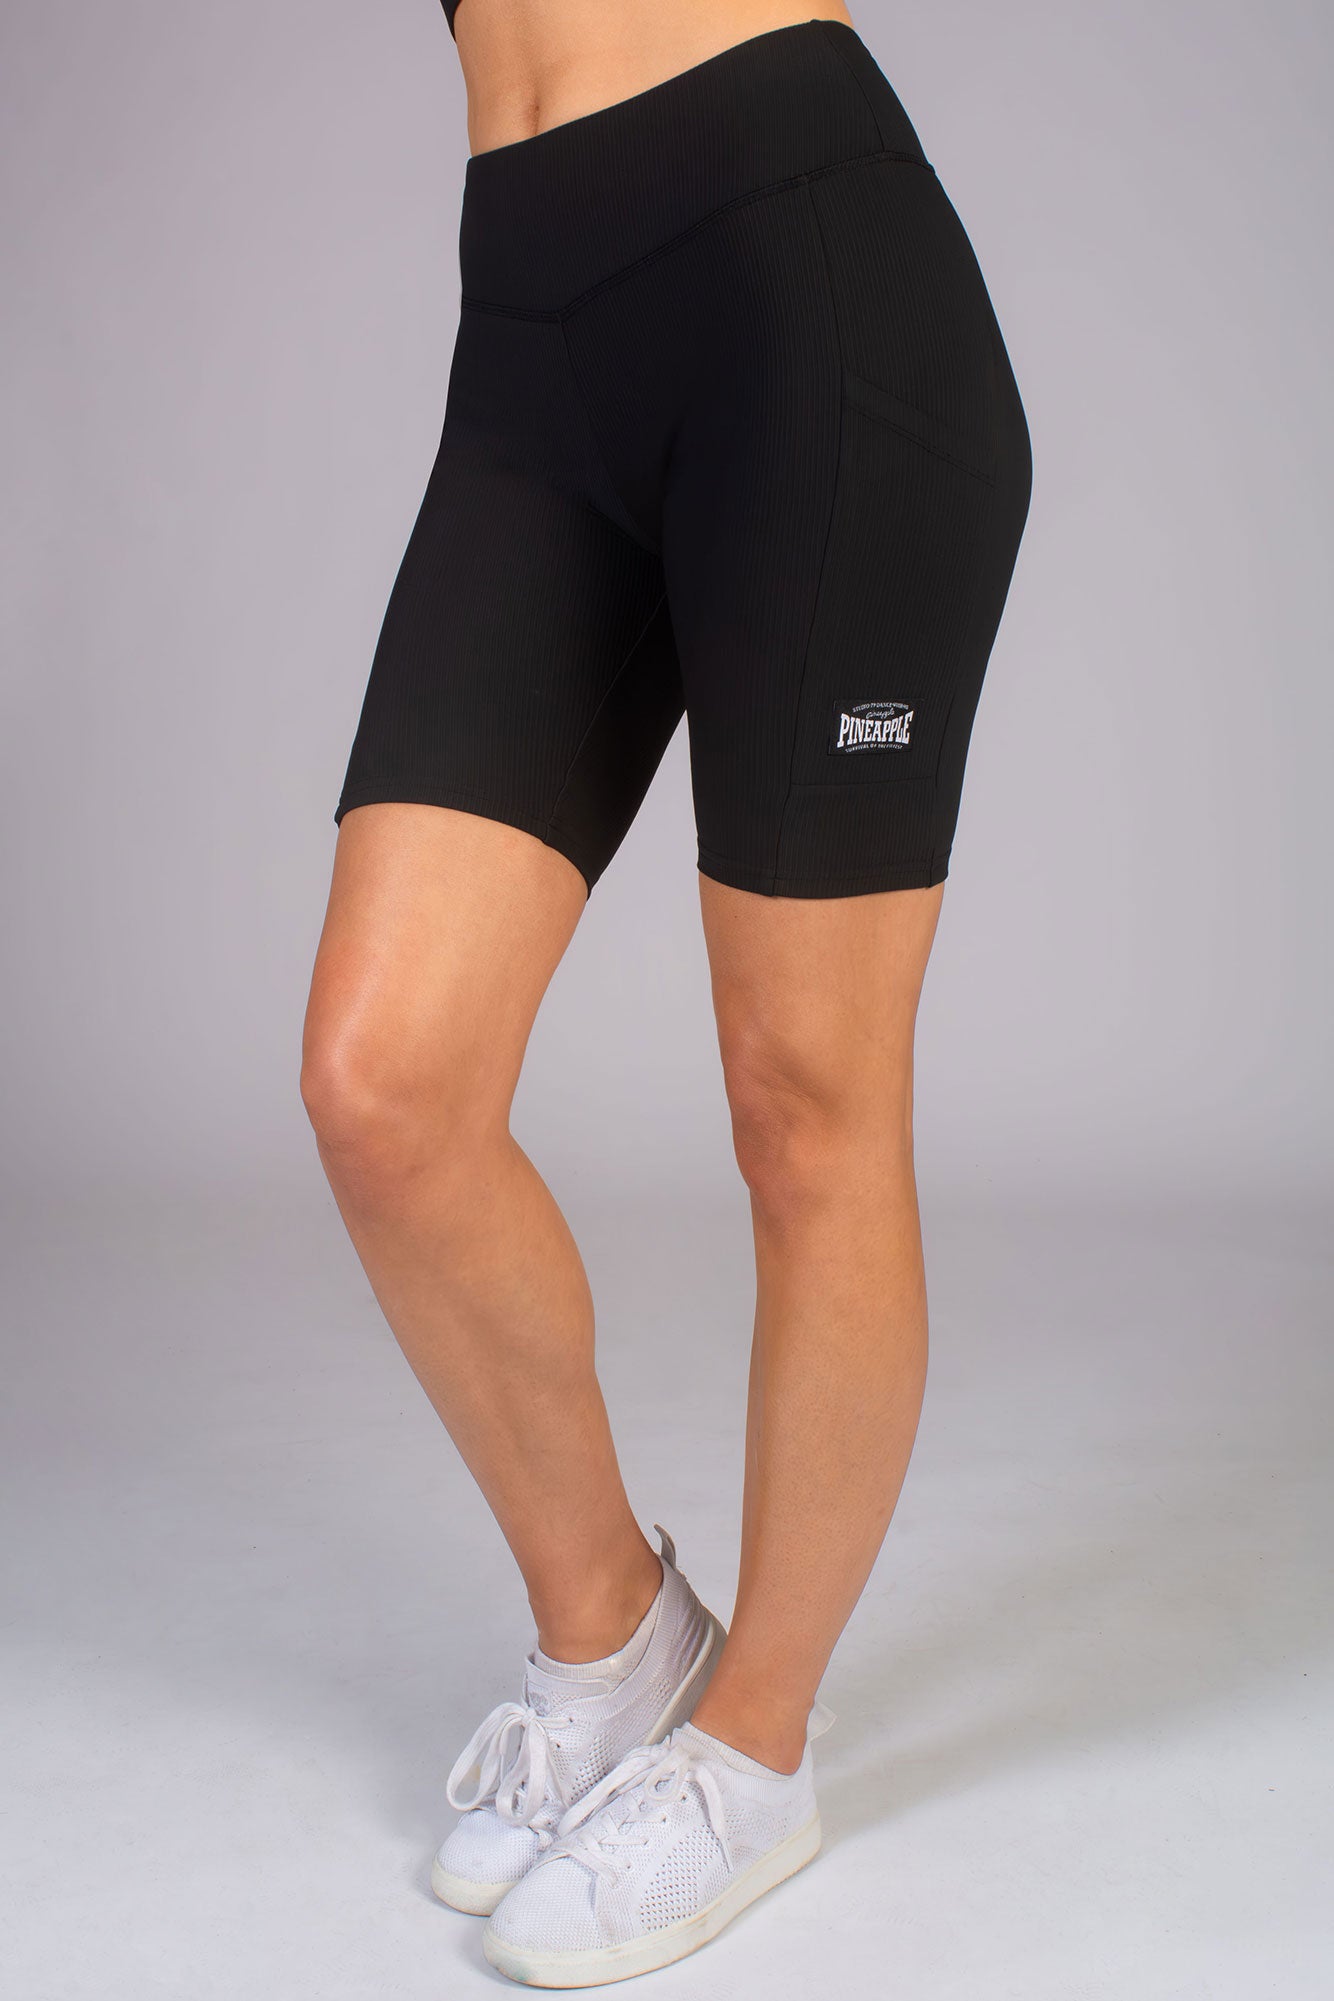 Women's Continental Shorts - Black / XS